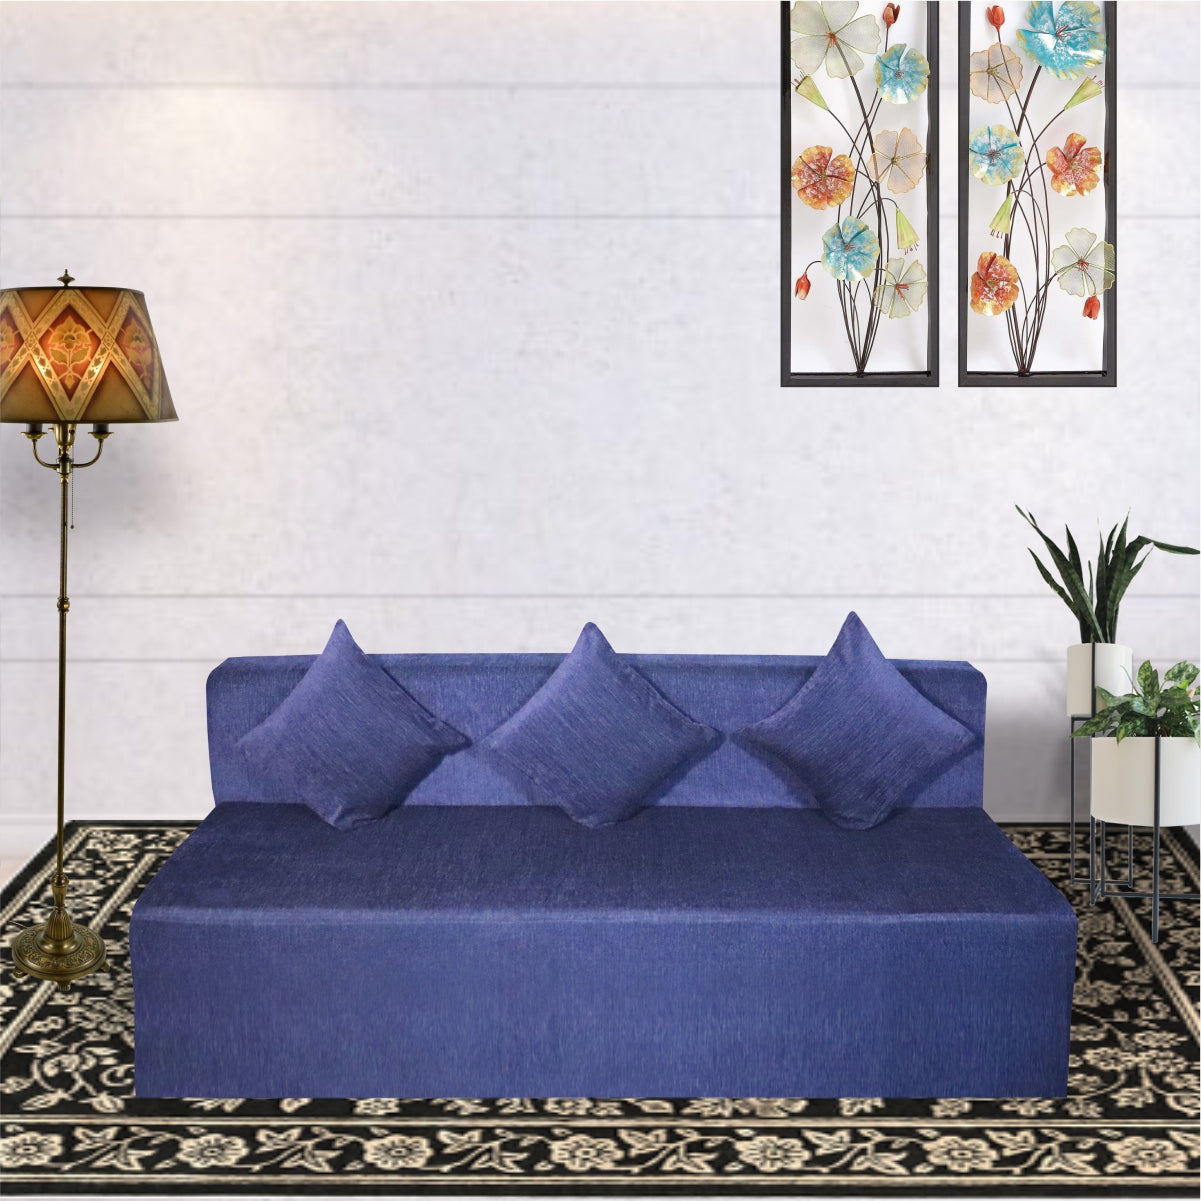 Cover of Blue Molfino Fabric 6'X6' Rejoice Sofa cum Bed